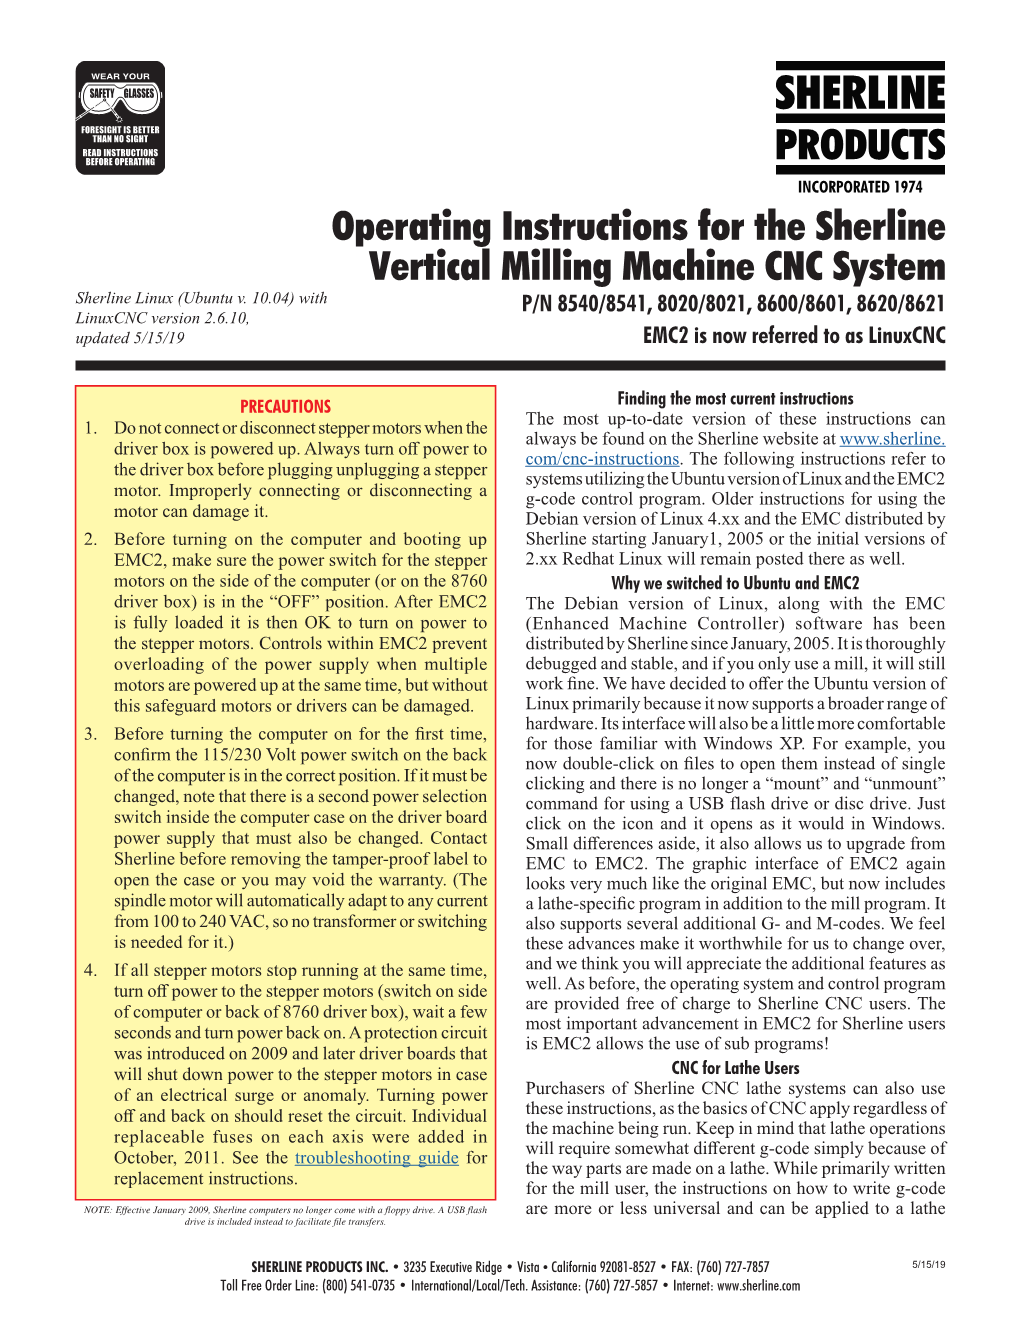 Operating Instructions for the Sherline Vertical Milling Machine CNC System Sherline Linux (Ubuntu V